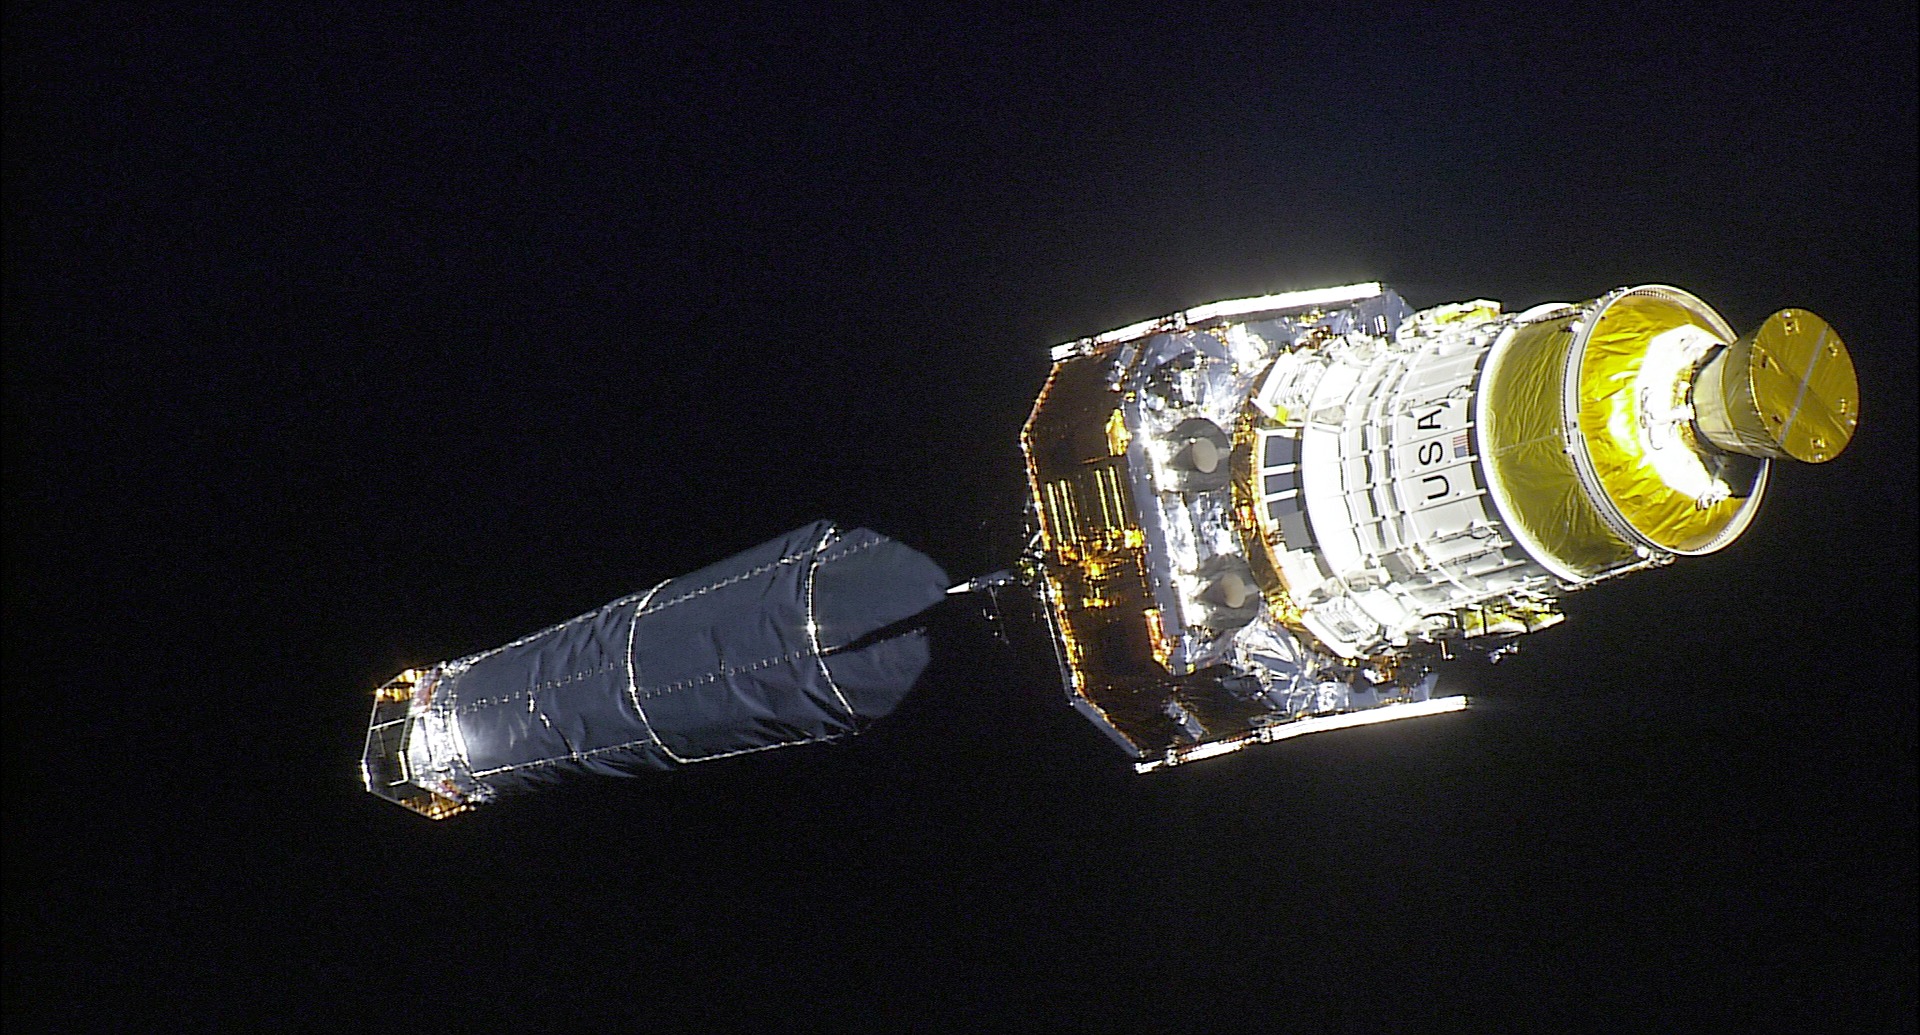 Chandra departs Columbia